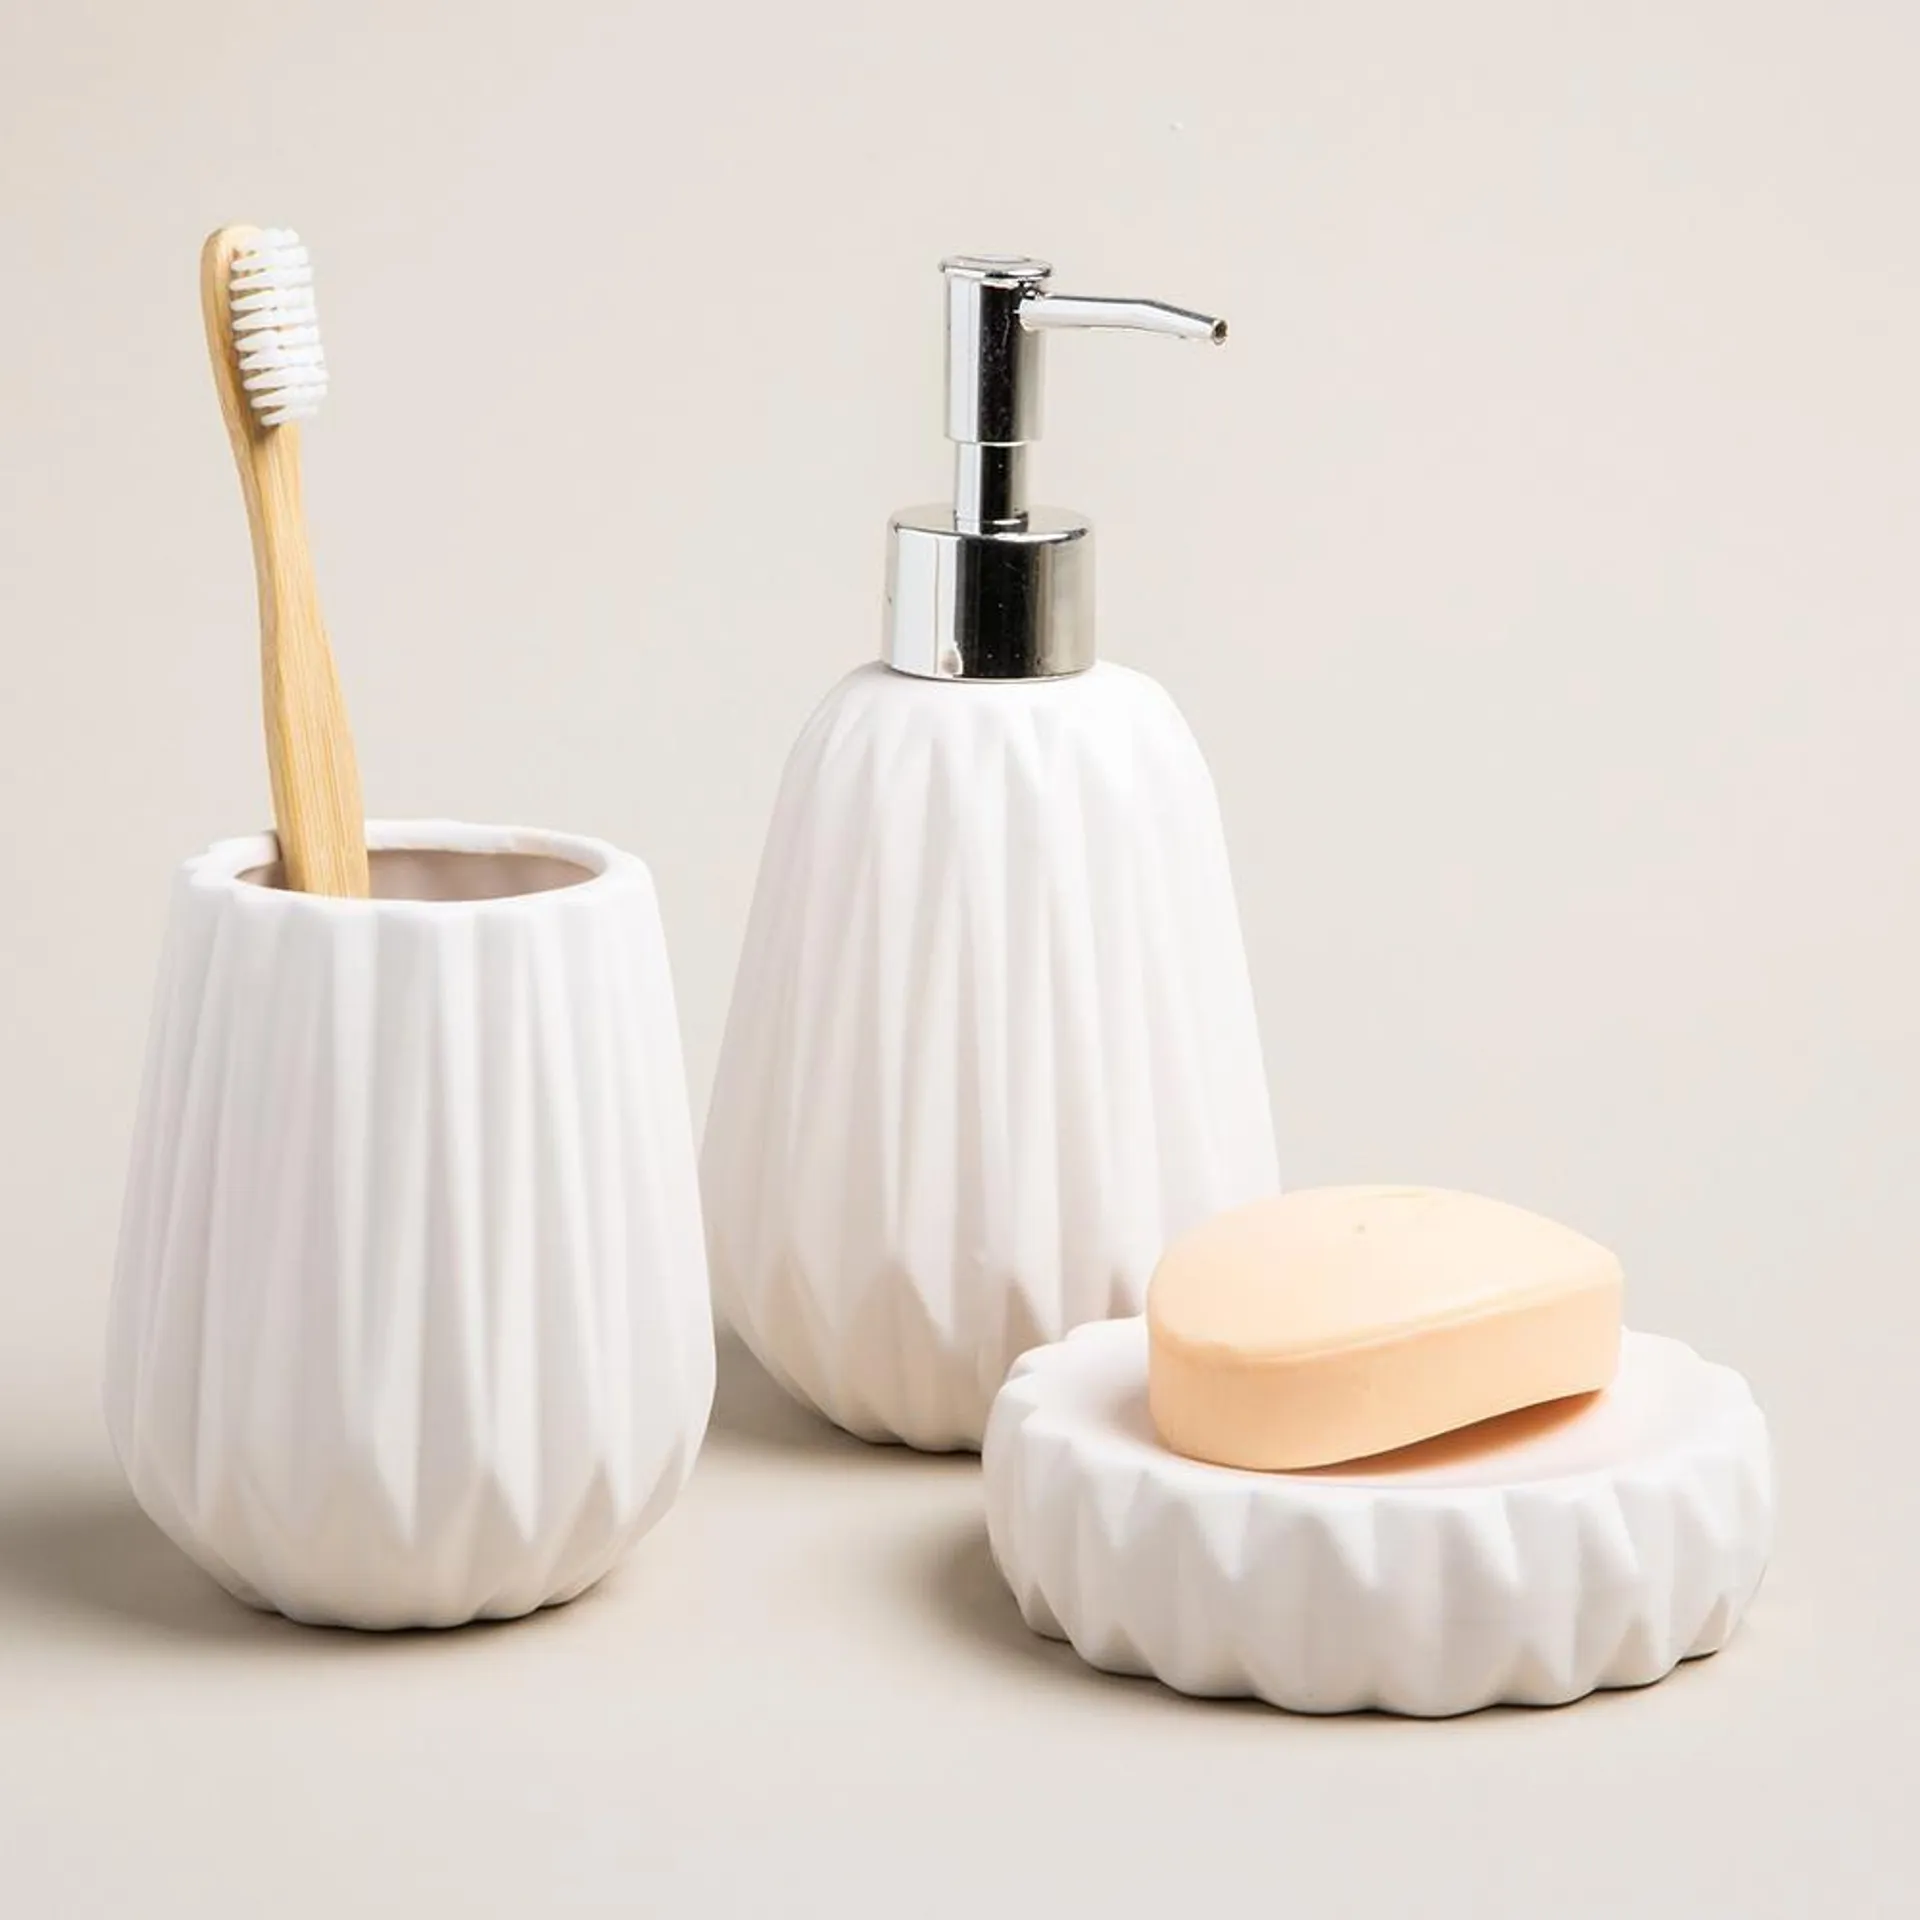 Harman Gem Ceramic Bath Accessory Combo - Set of 3 (White)